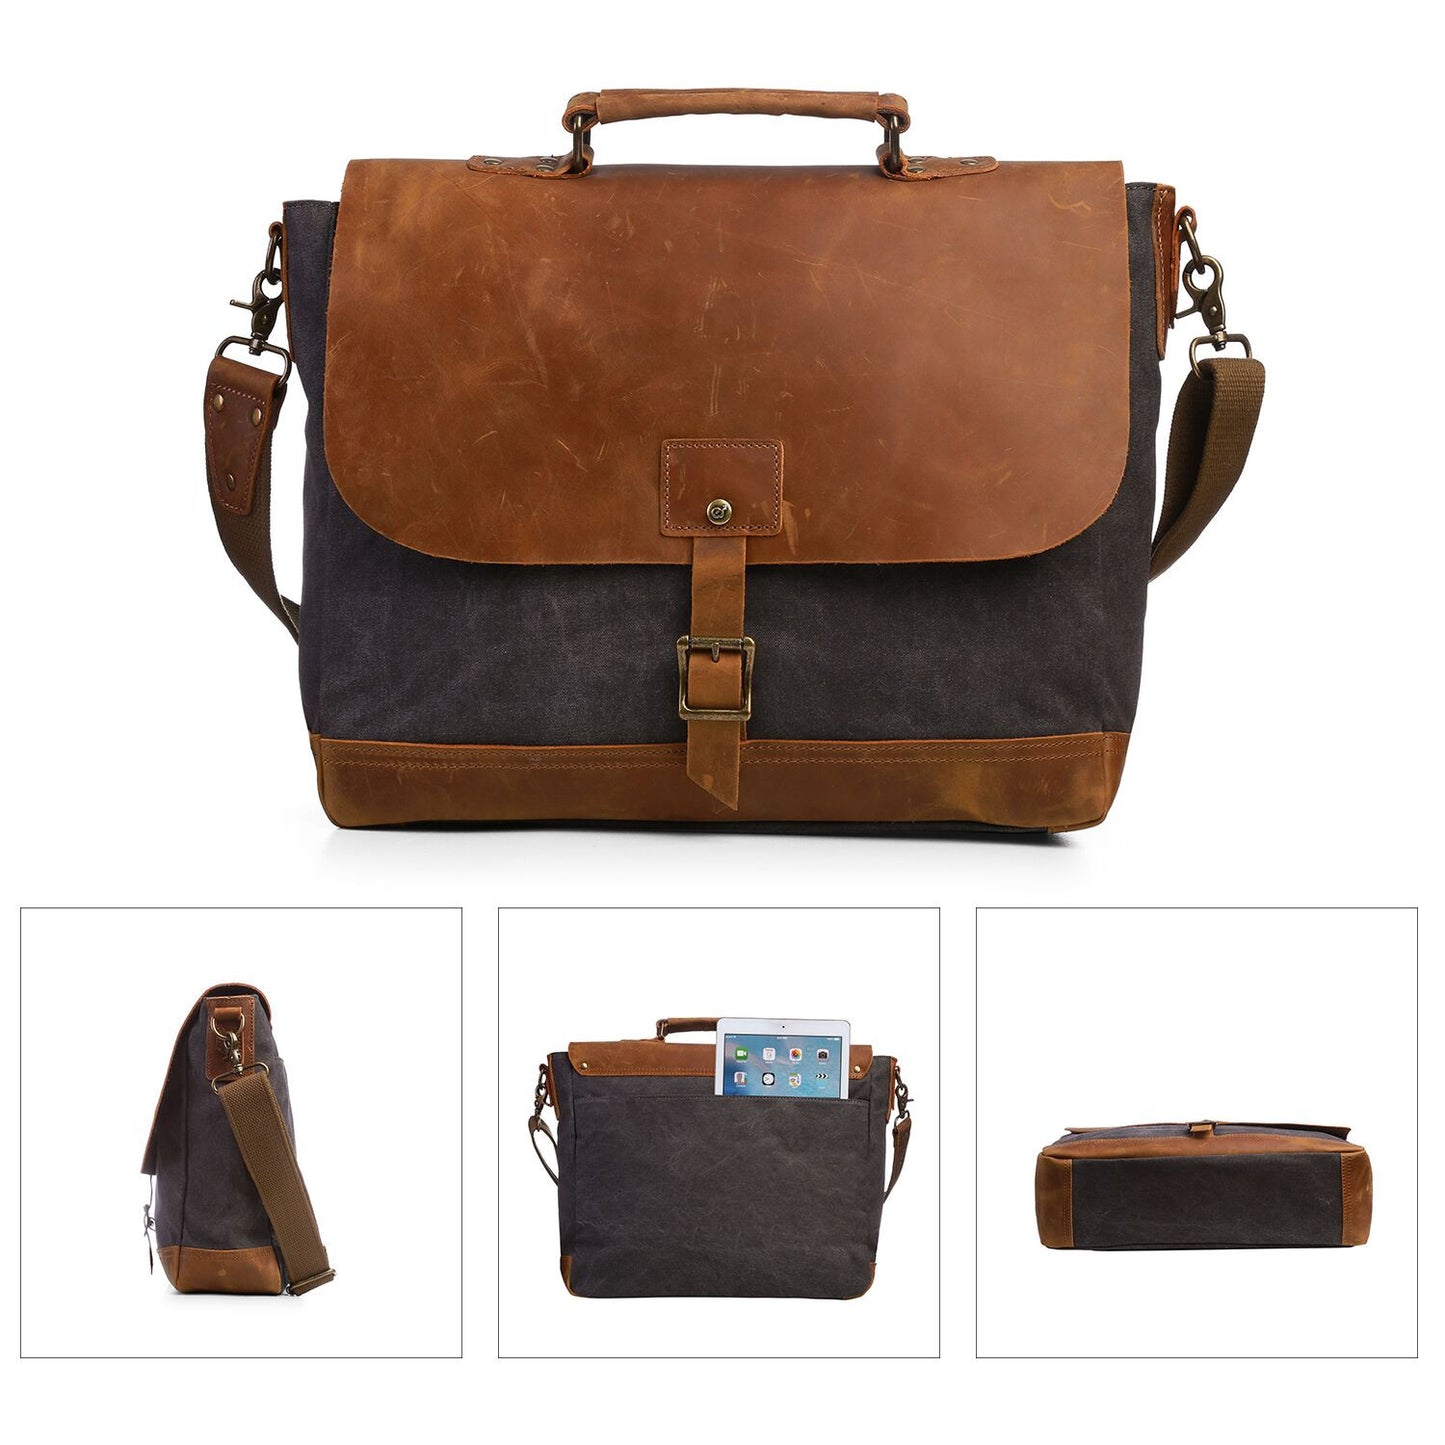 ECOSUSI Canvas Laptop Bag Briefcase Business Handbag Messenger Shoulder Bag with Padded Compartment for 15.6" Laptop